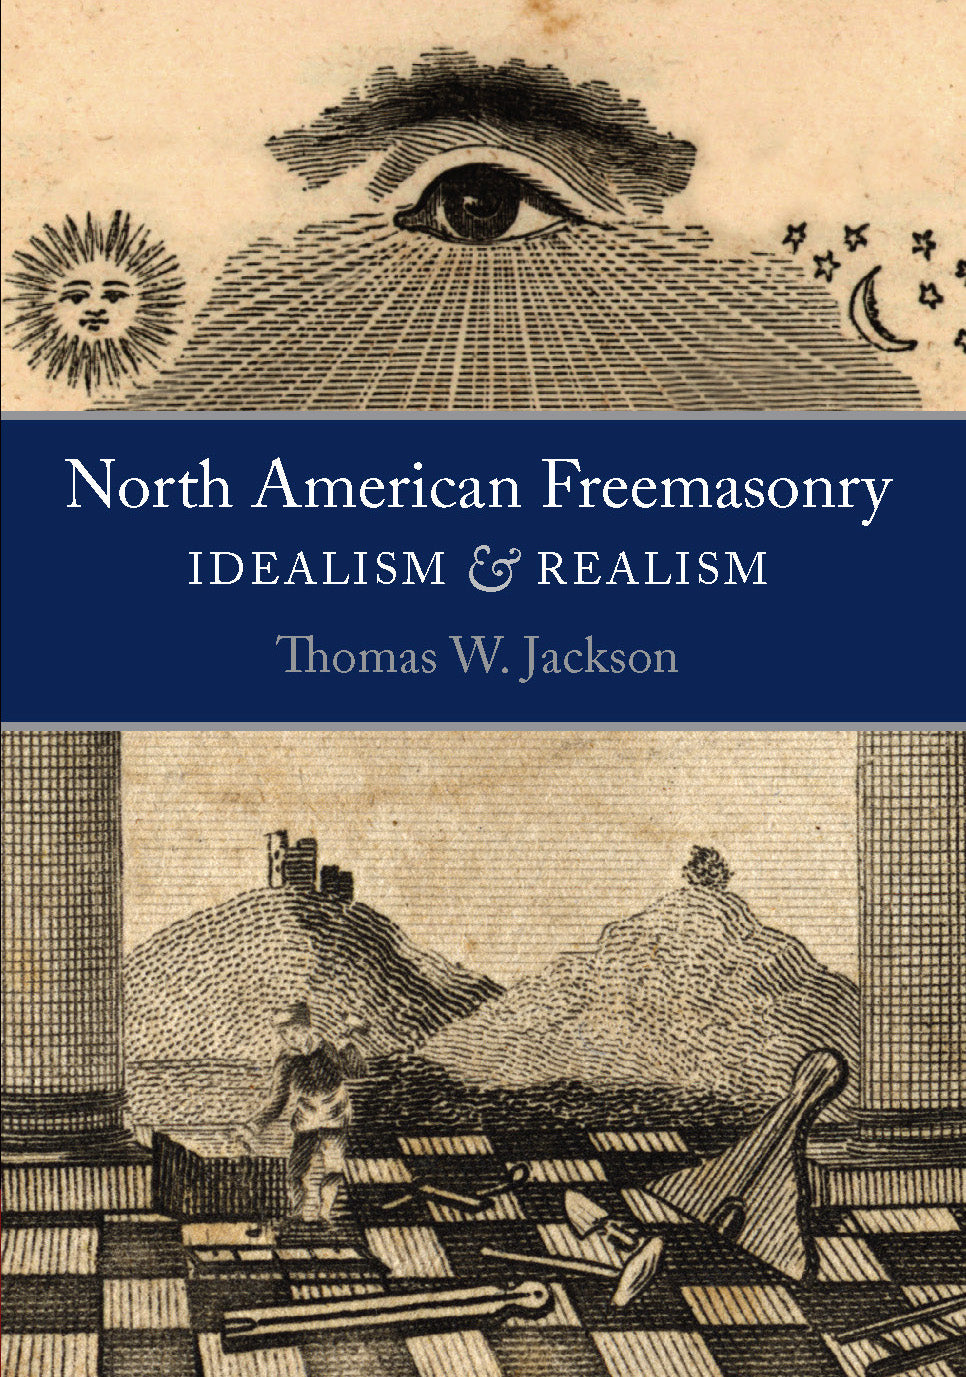 North American Freemasonry: Idealism and Realism